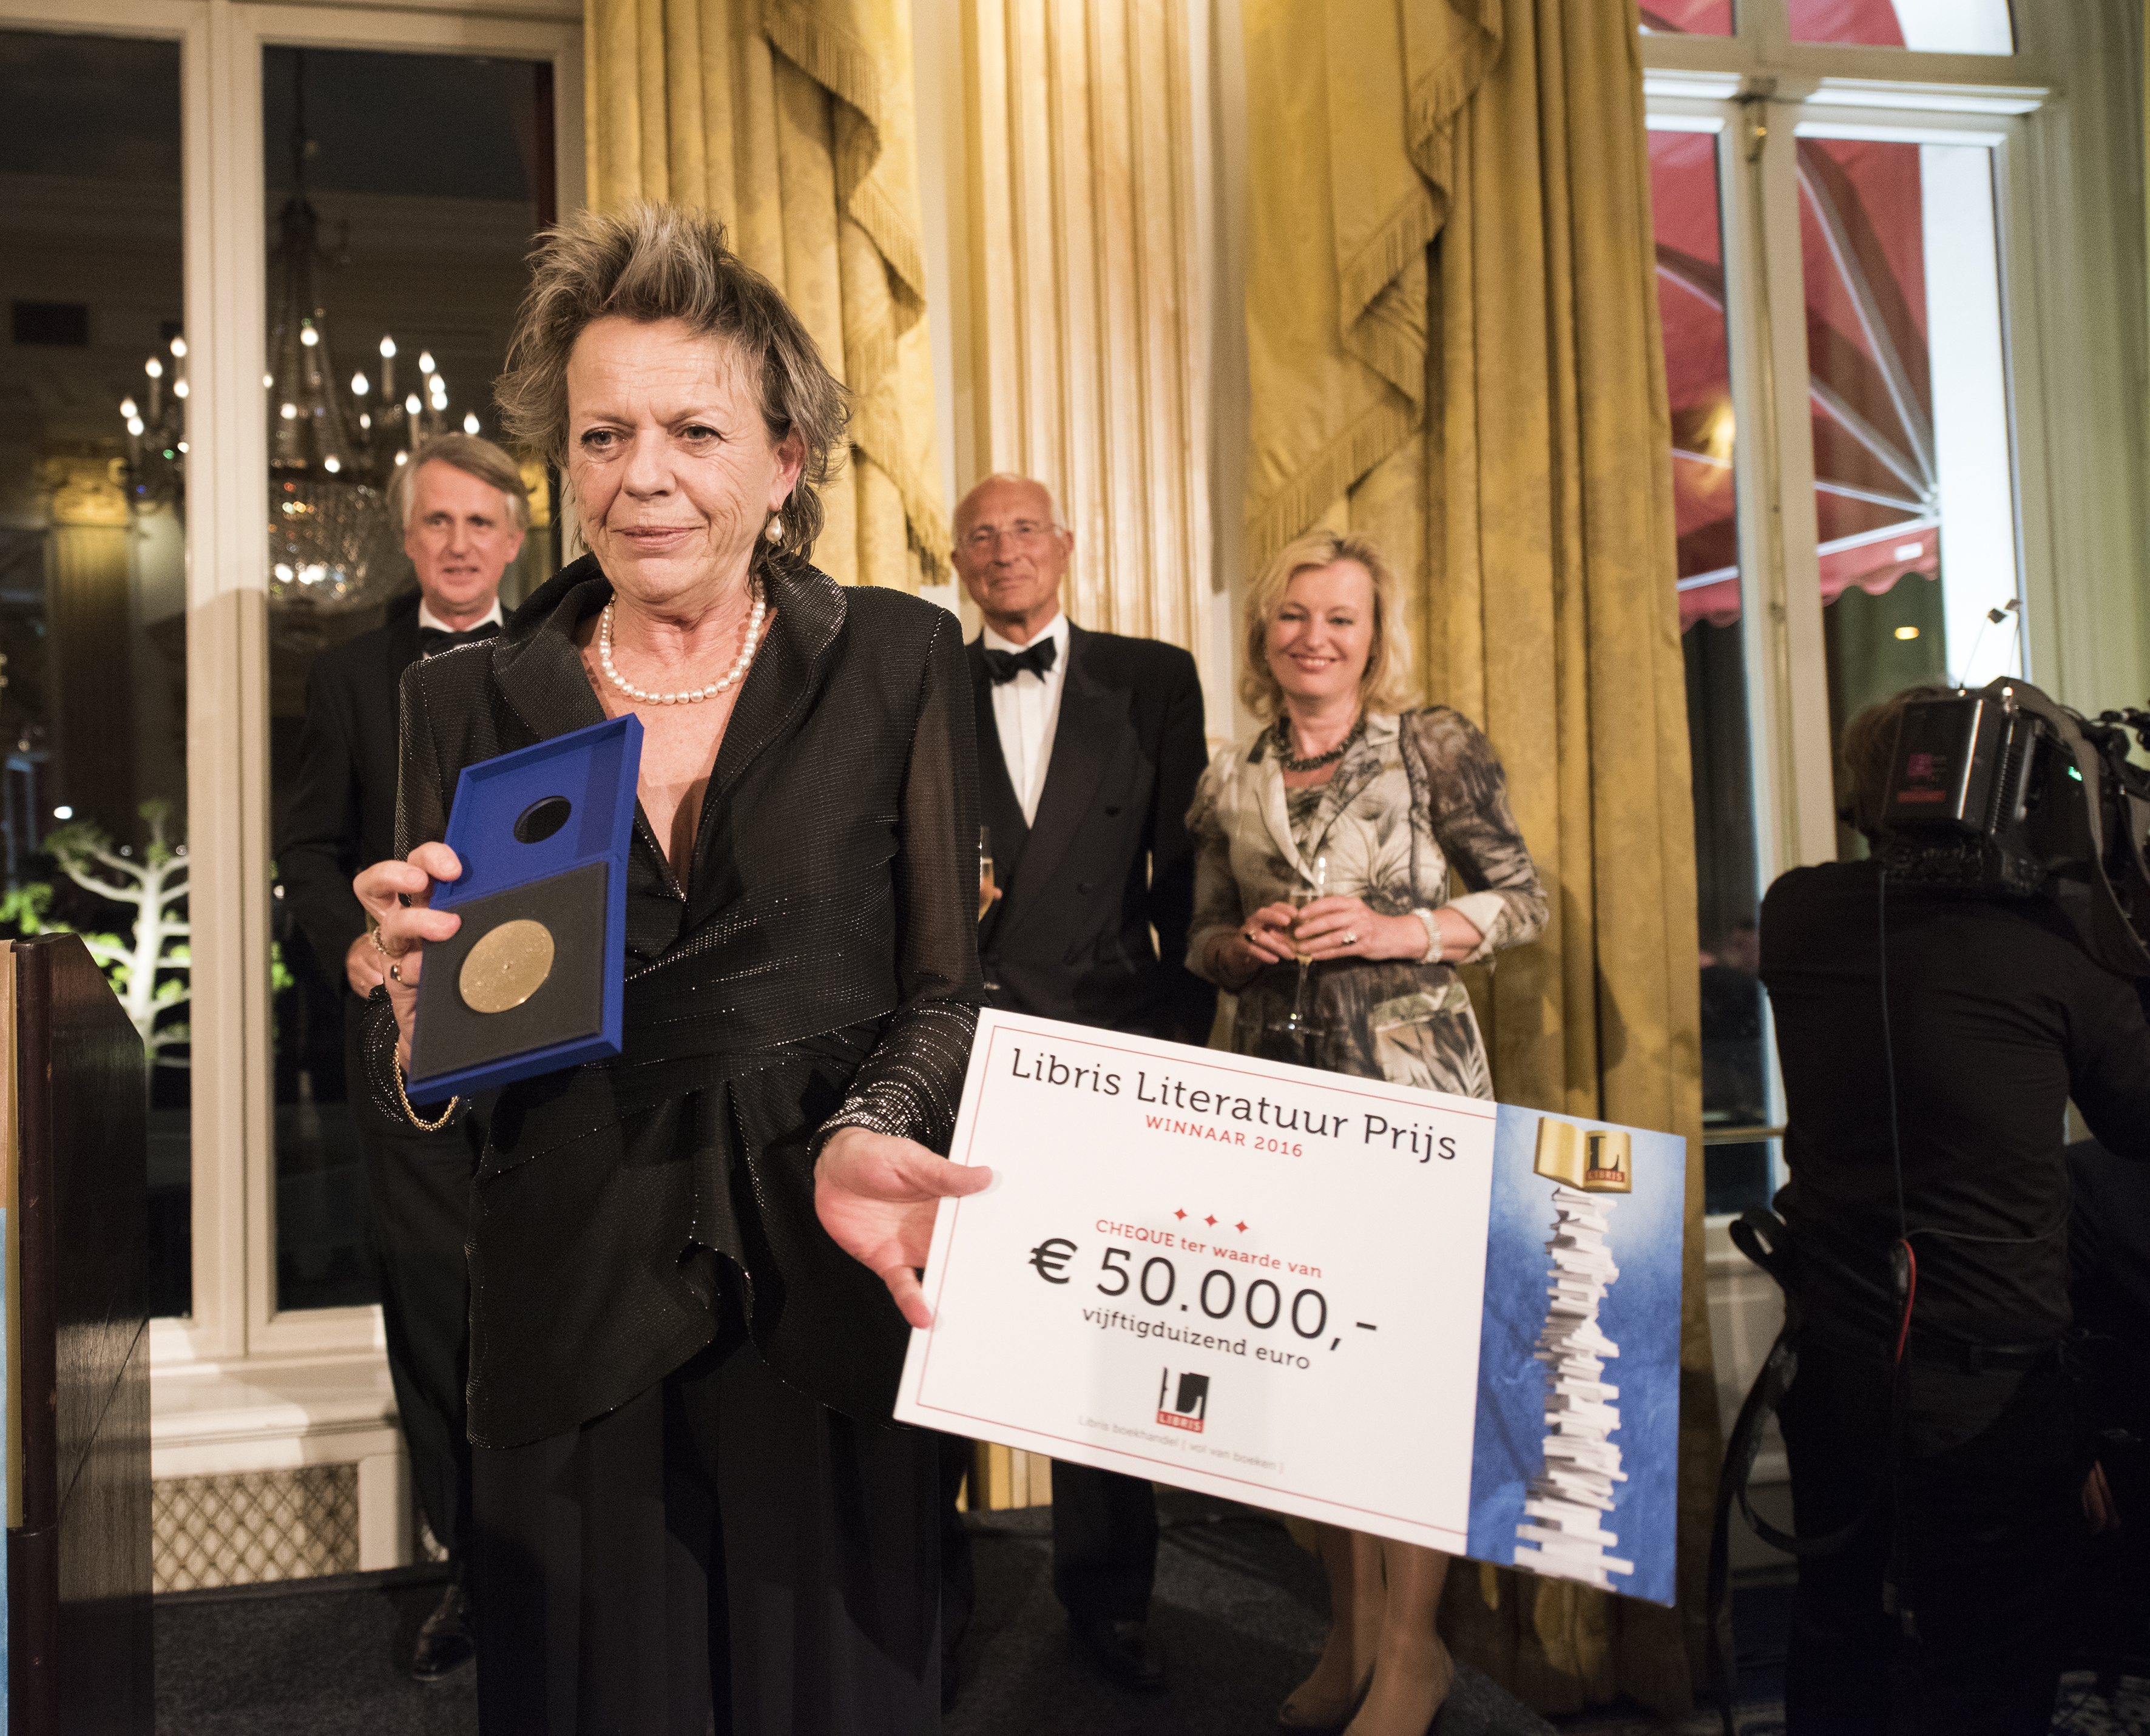 Connie Palmen: Libris Literatuurprijs 2016